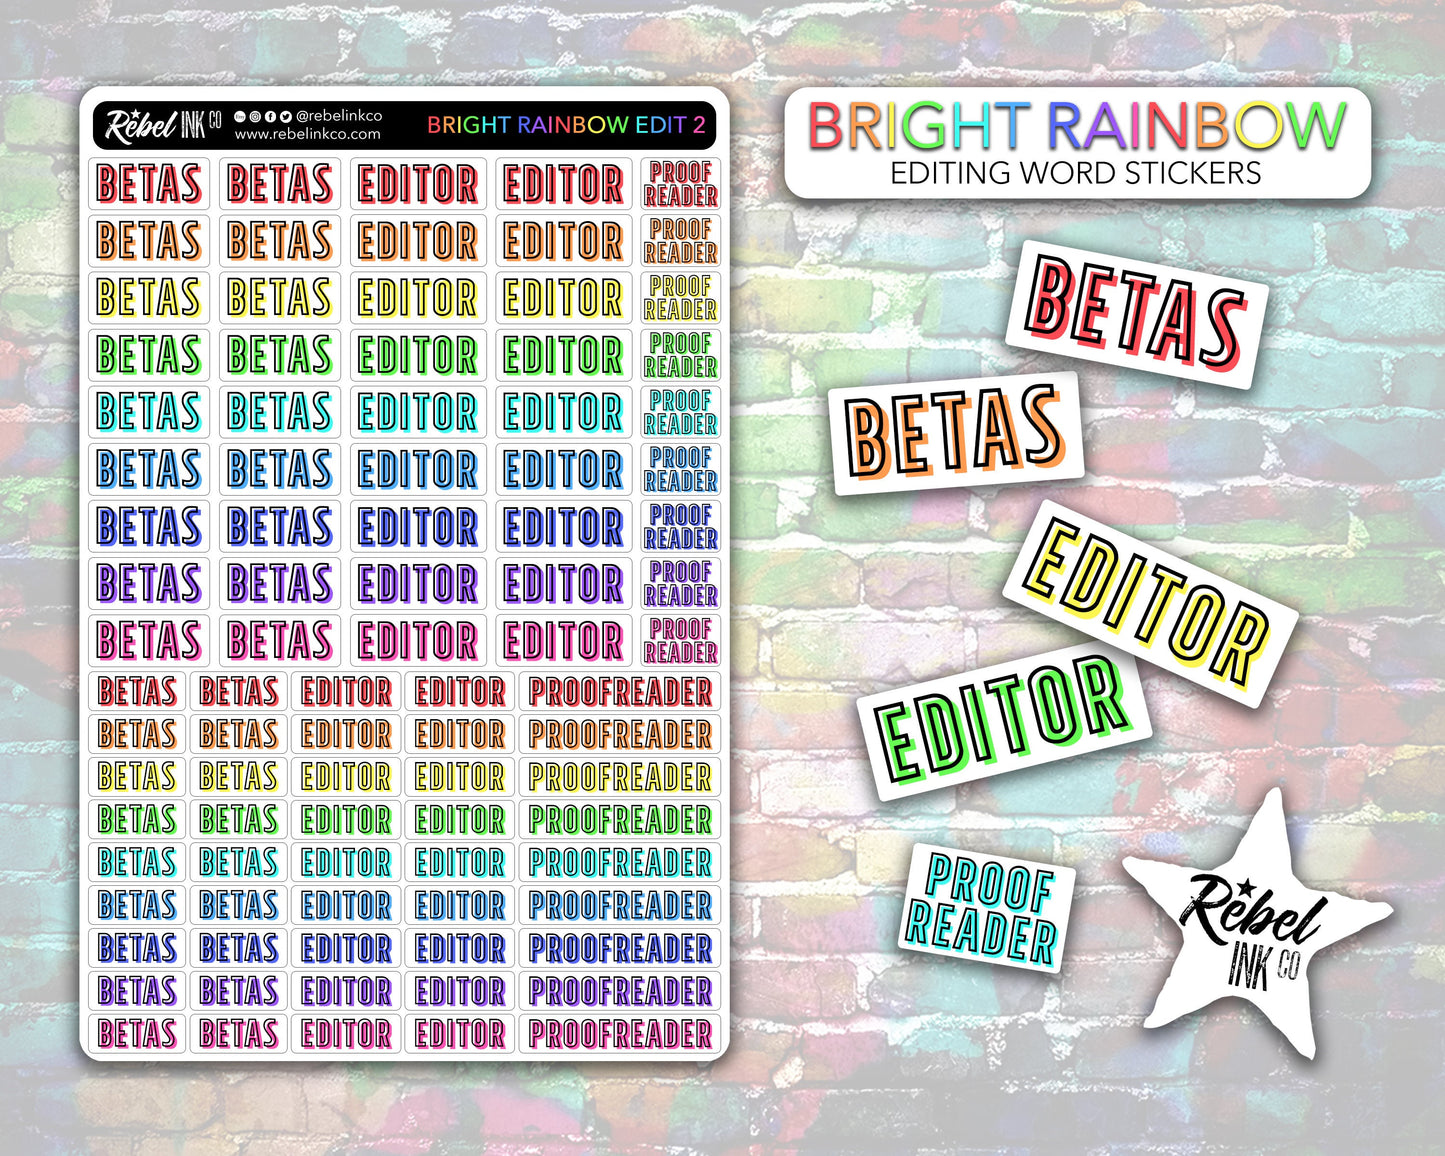 Author Editing 2 Stickers - Bright Rainbow